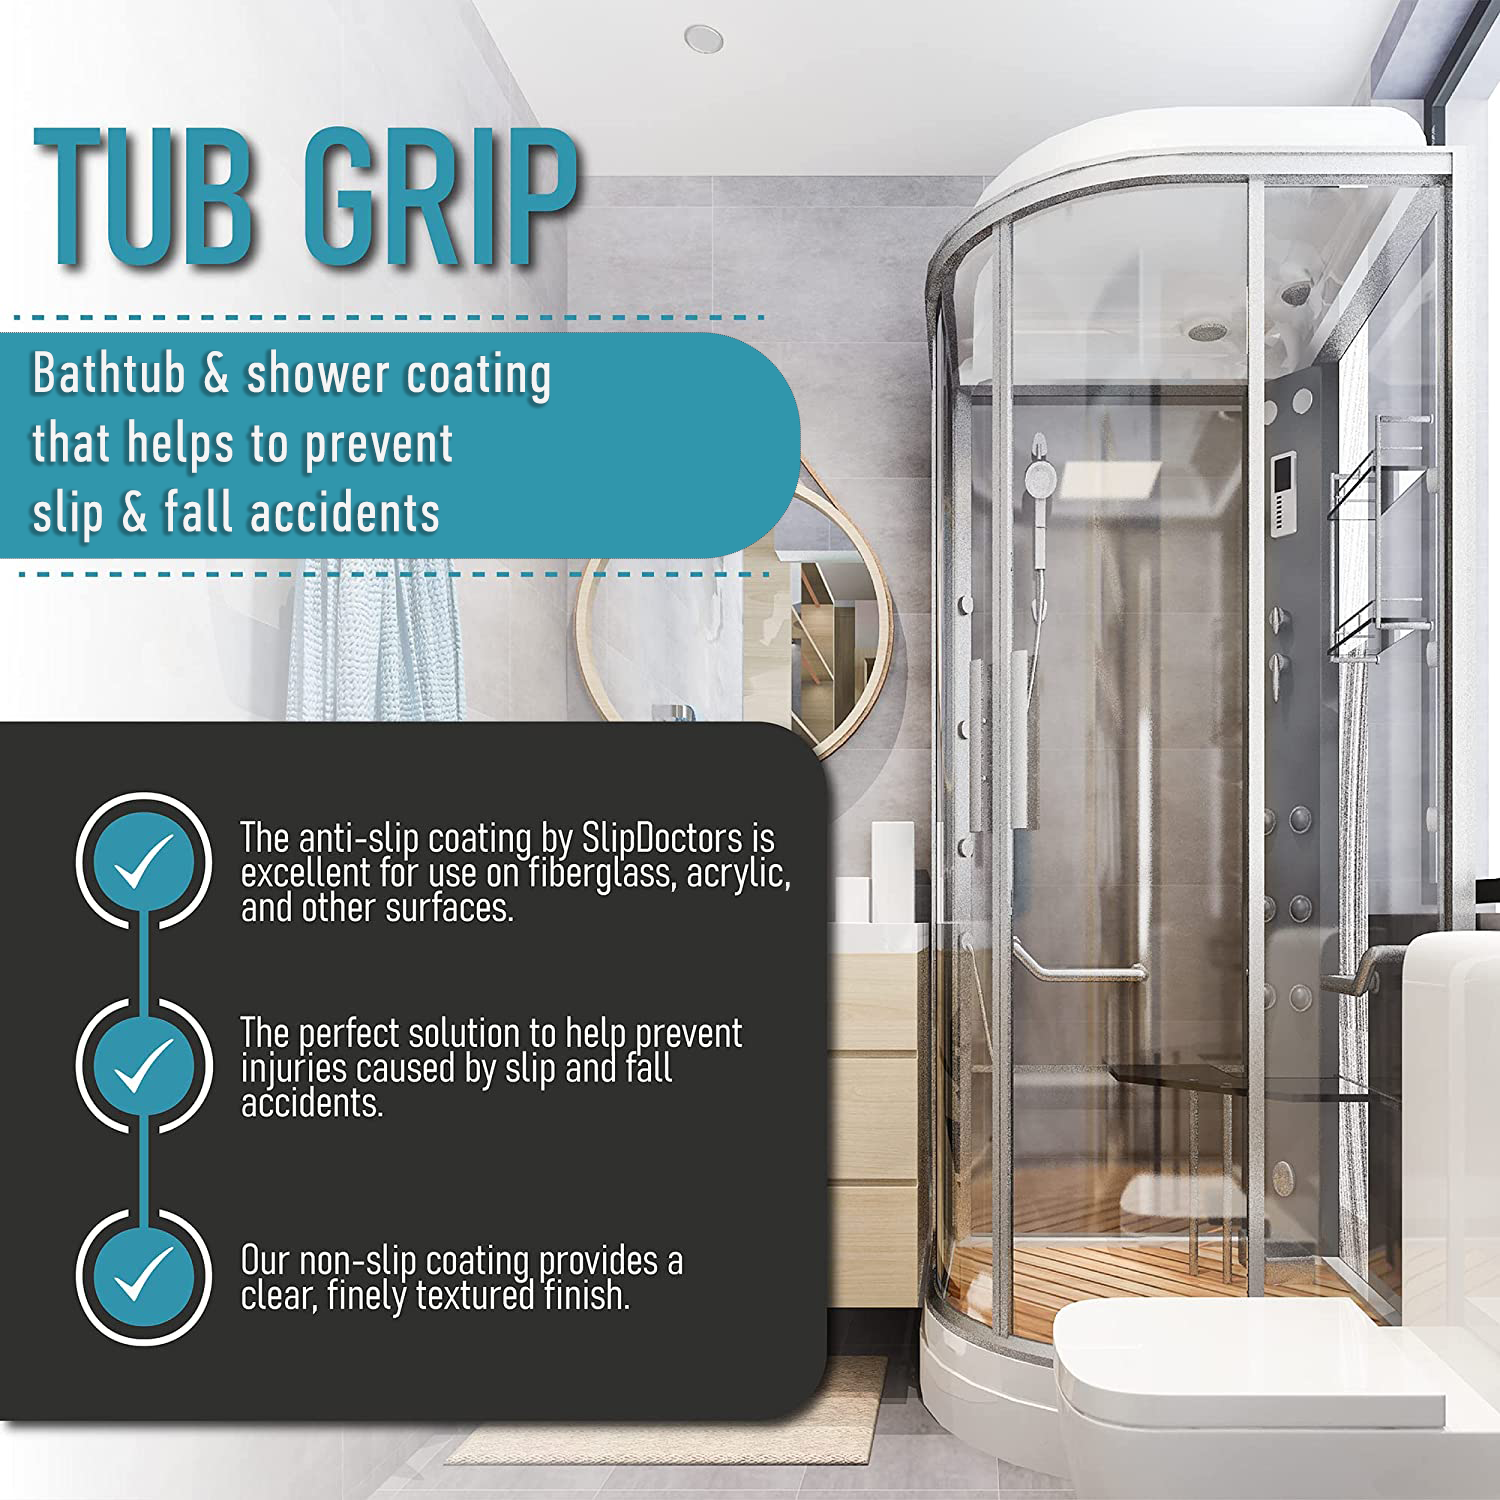 Get Anti-Slip Coating for Shower Trays